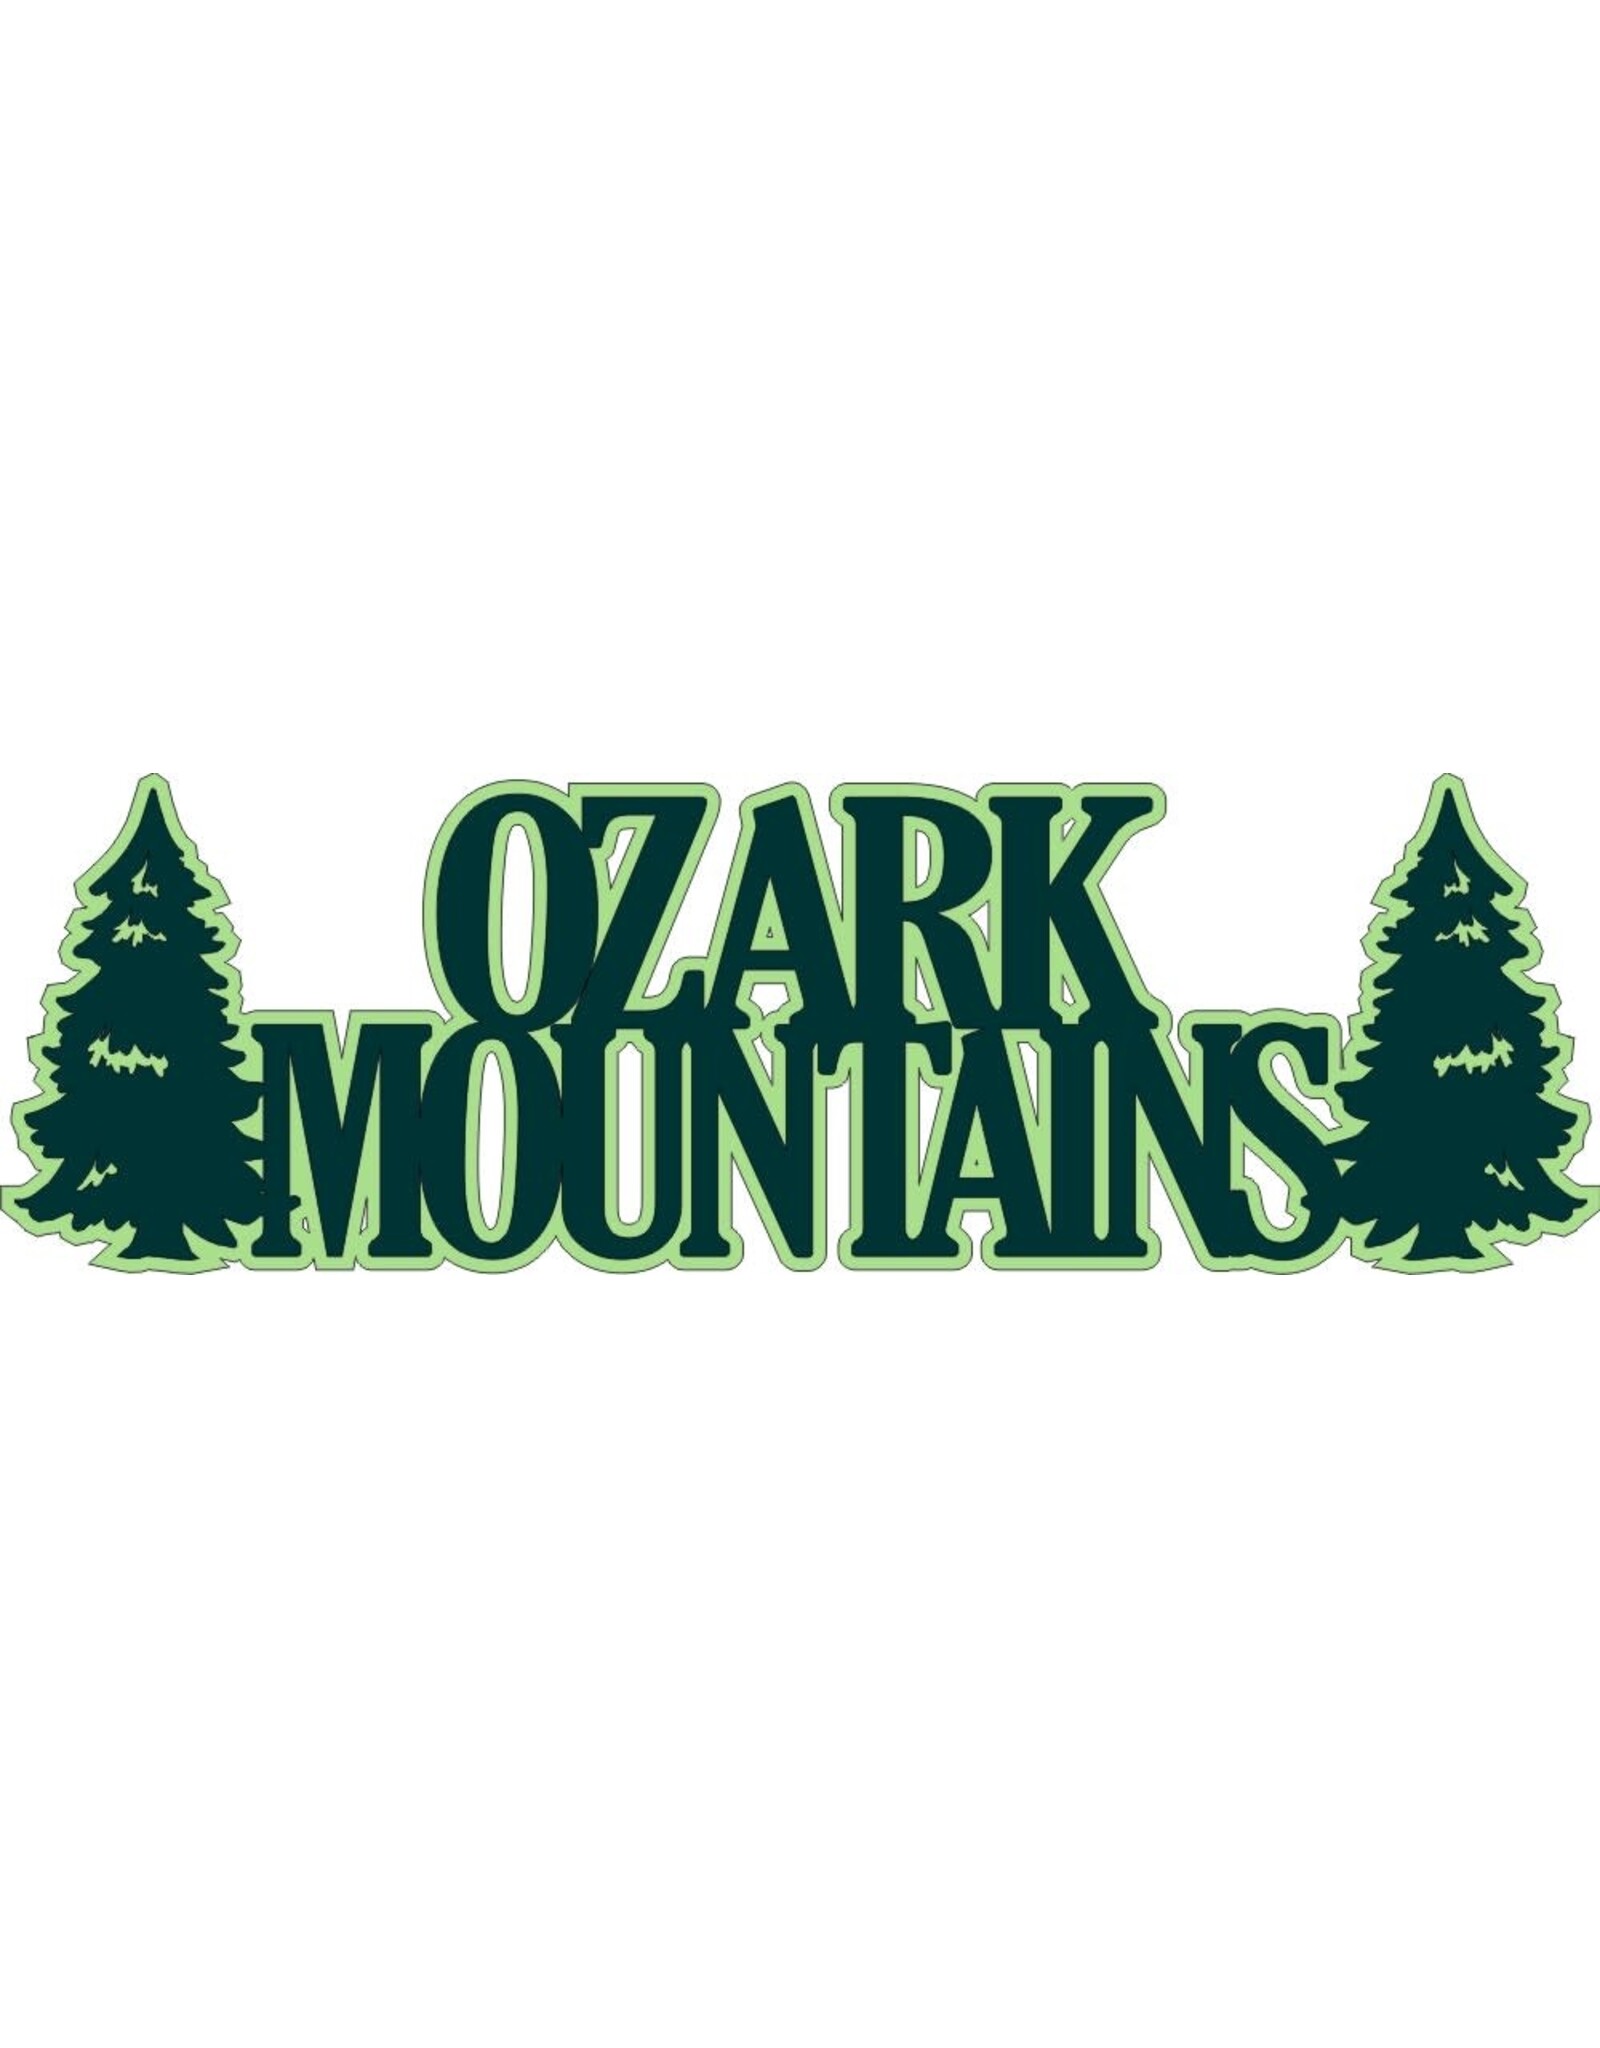 Ozark Mountain Banner